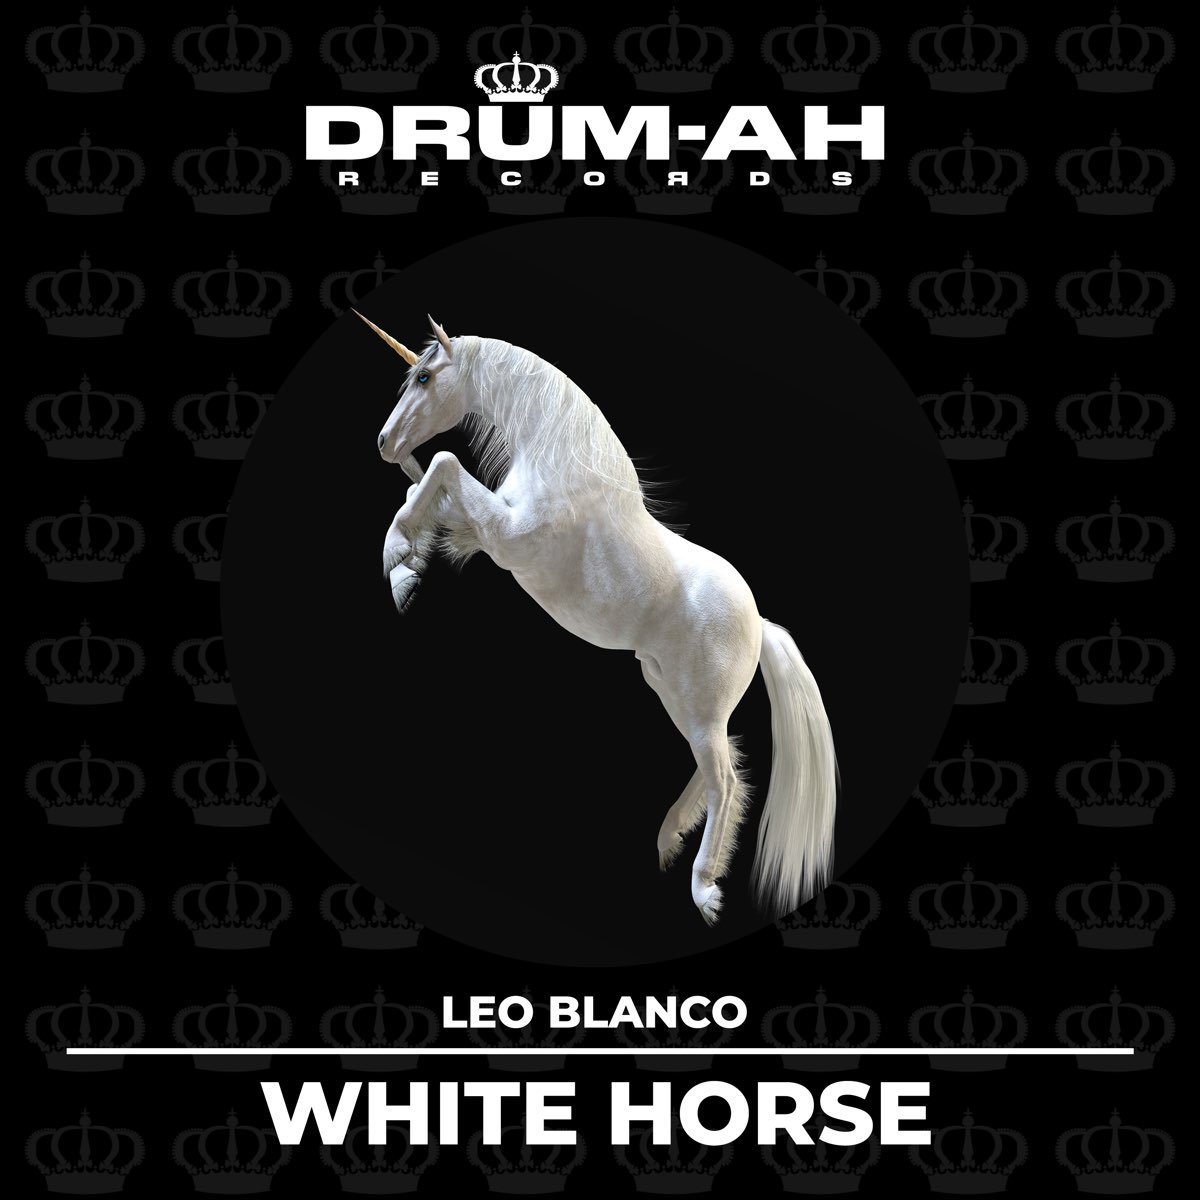 White Horse альбом. White Horse песня. White Horse КС. Песня Хорс Вайт Хорс.